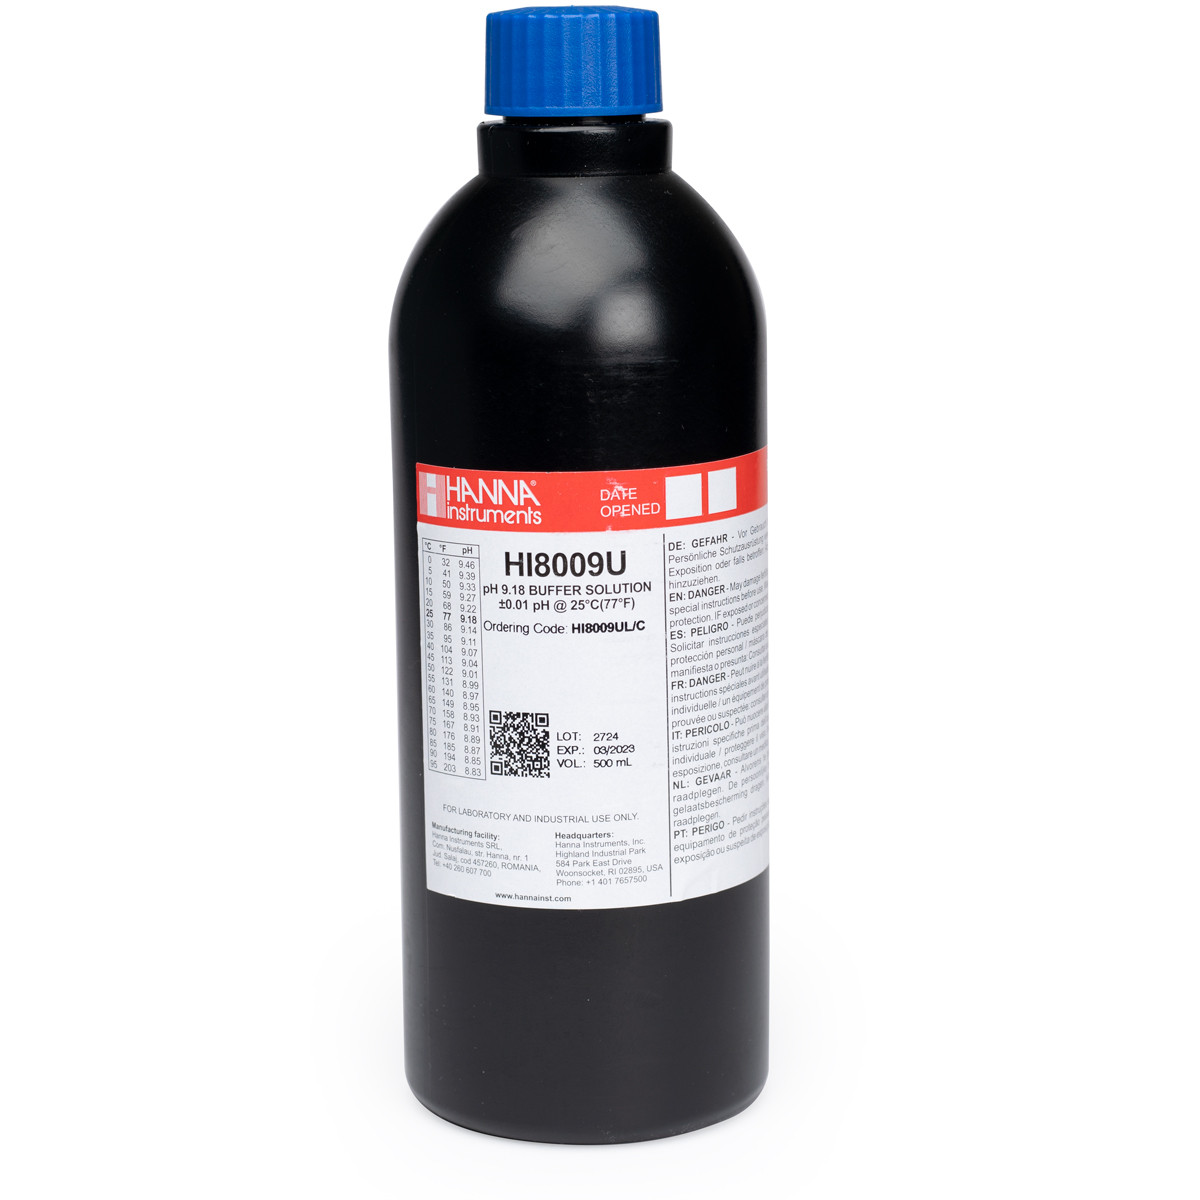 pH 9.18 Calibration Buffer in FDA Bottle (500 mL)